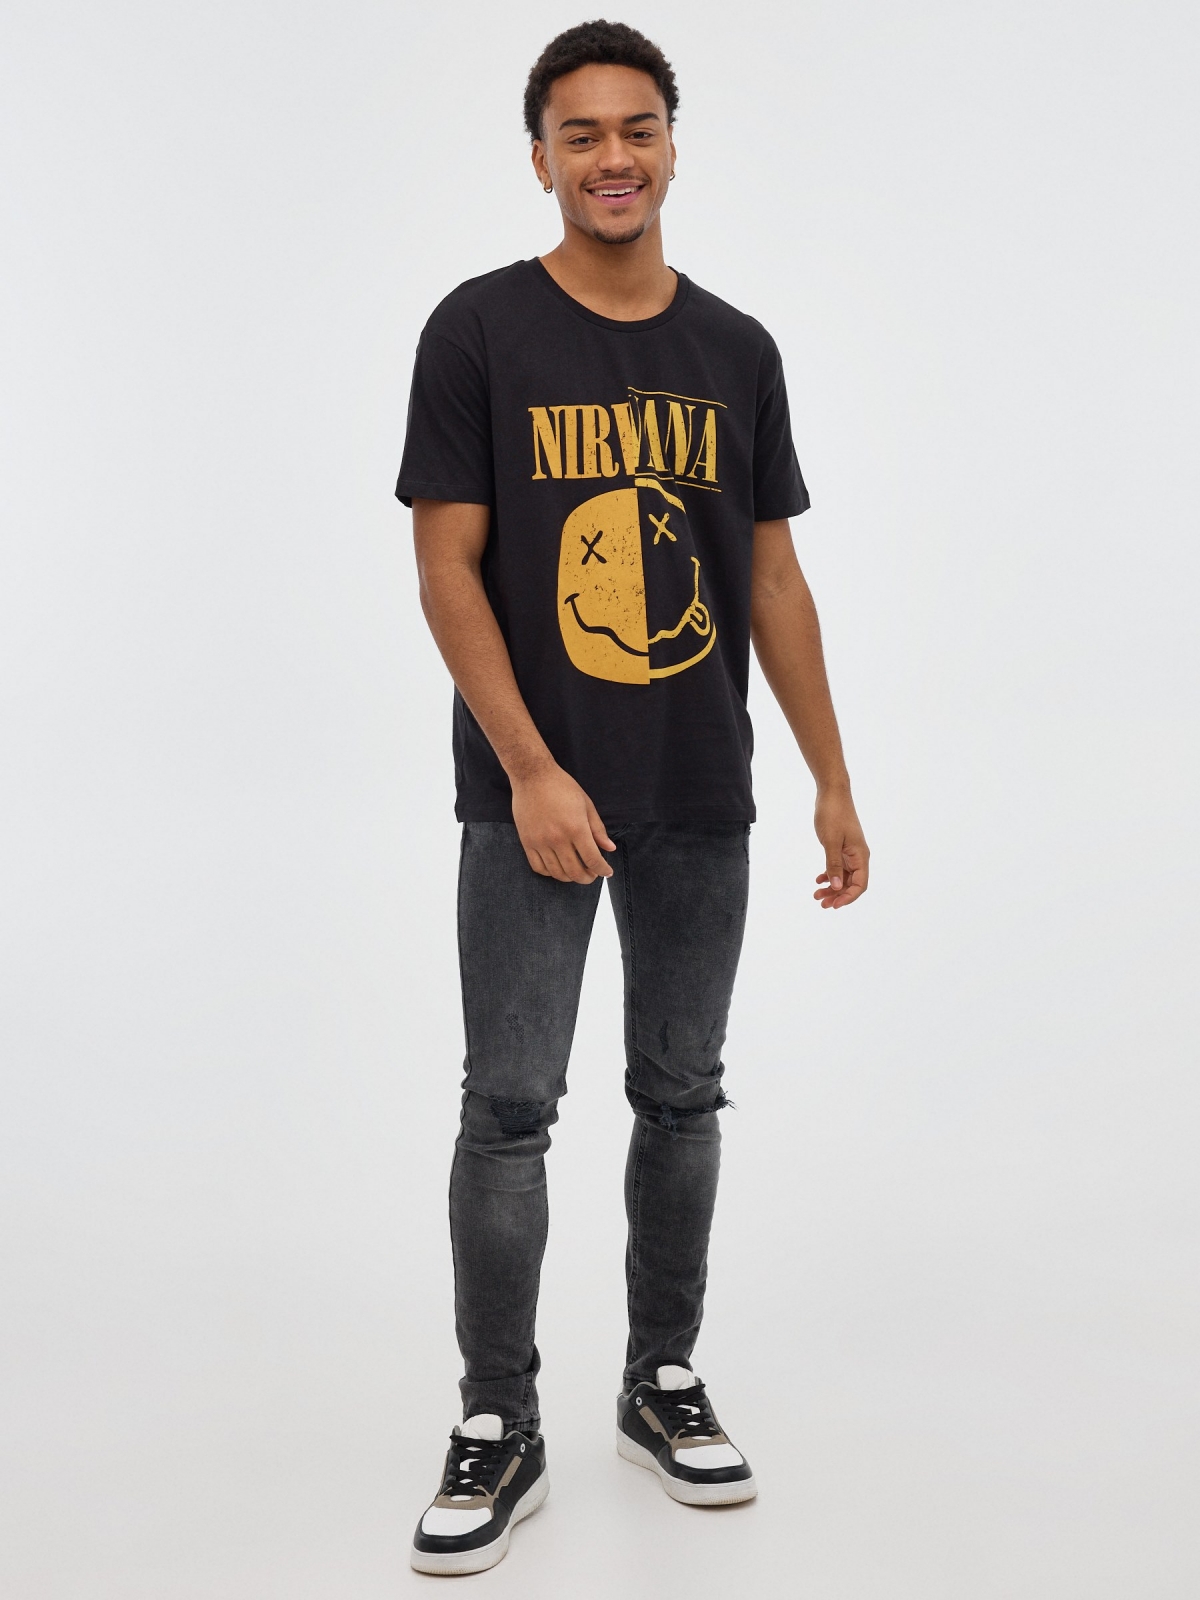 T-shirt impressa Nirvana cinza escuro vista geral frontal